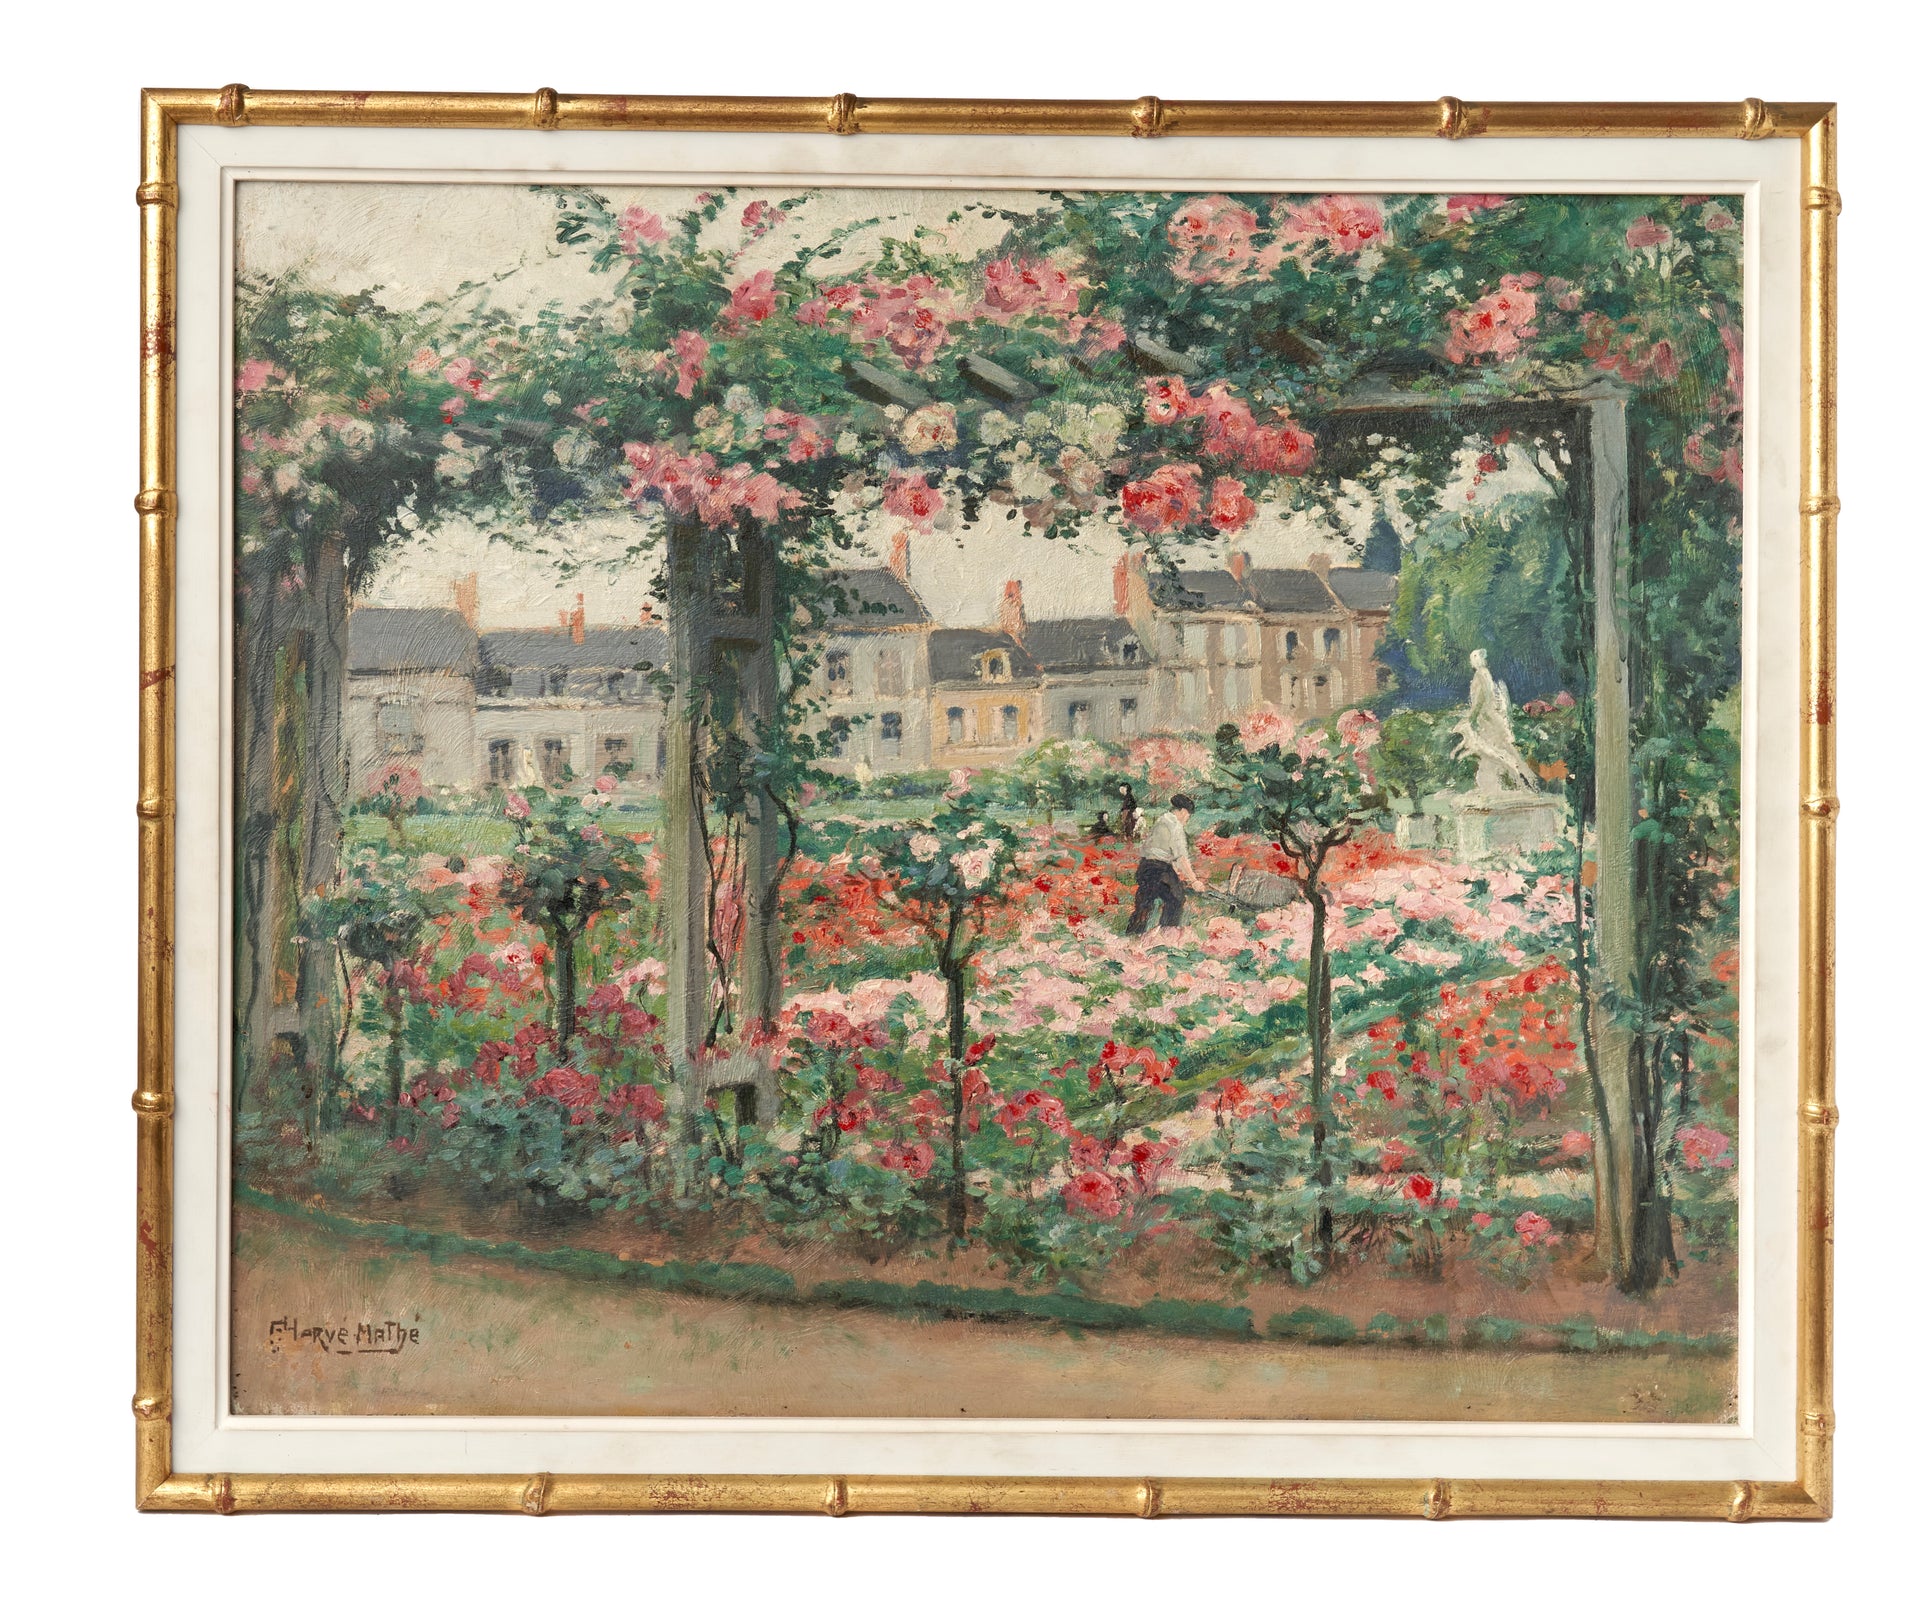 SOLD Jules Alfred Herve-Mathe (1868-1953) La Roseraie, Jardin des Plantes, Le Mans, circa 1937-38